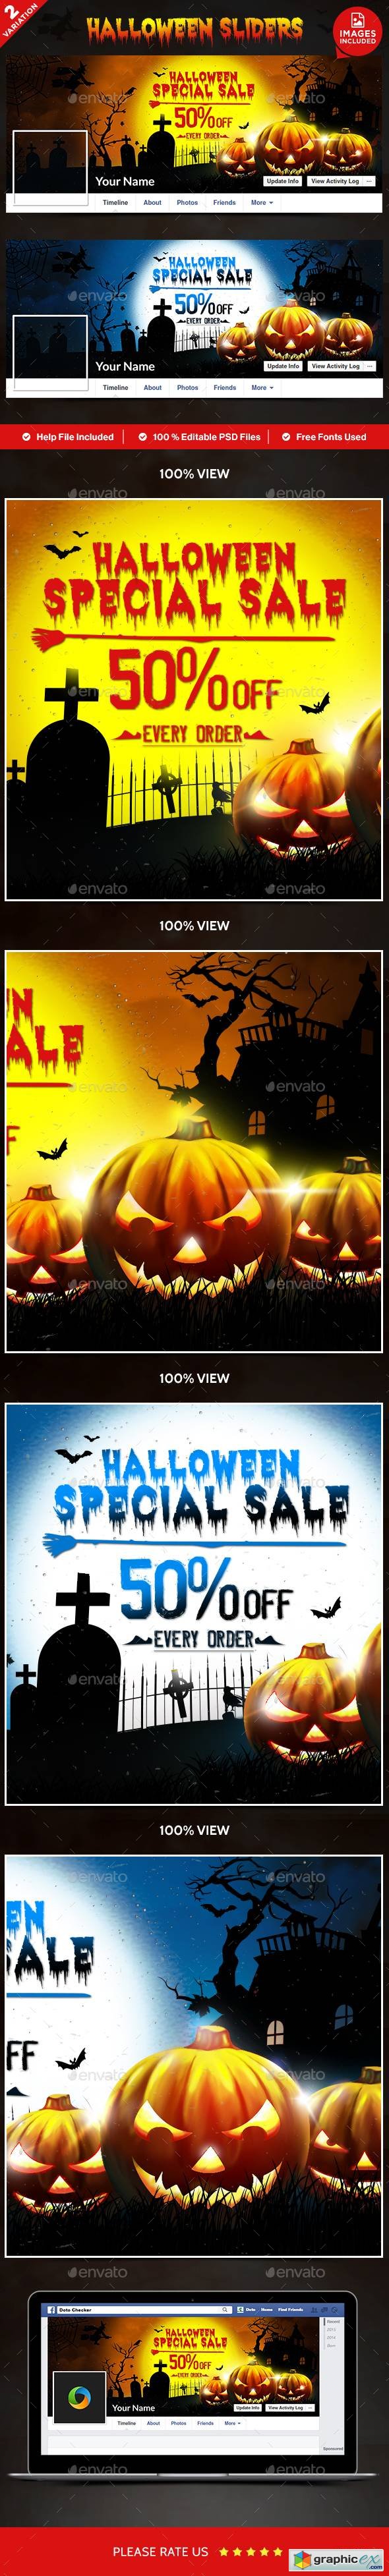 Halloween Facebook Covers - 2 Designs